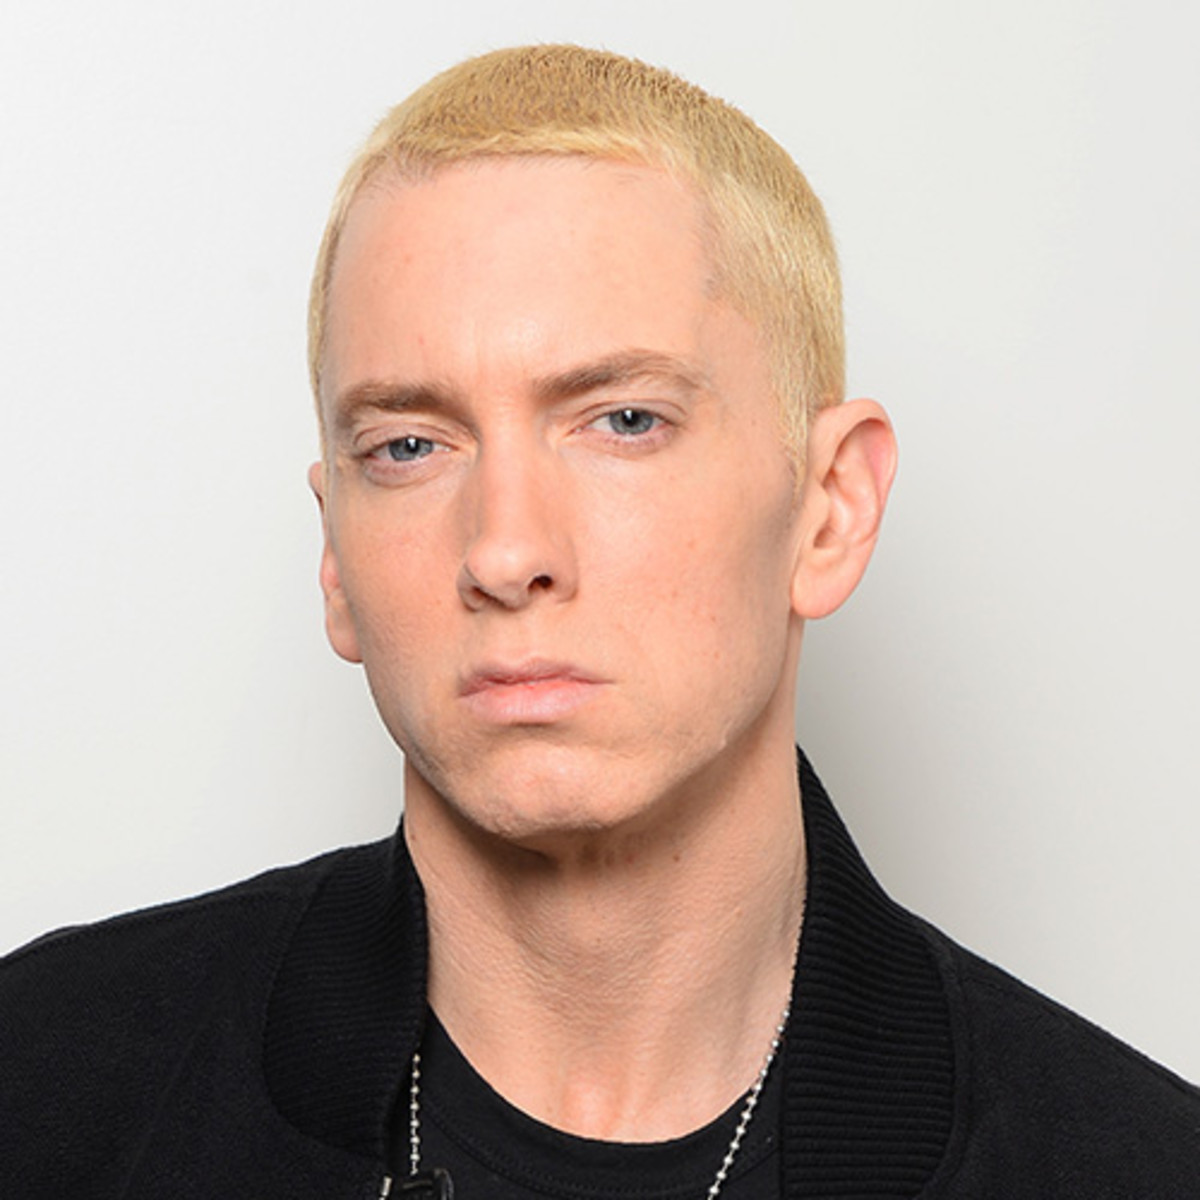 How old is Eminem